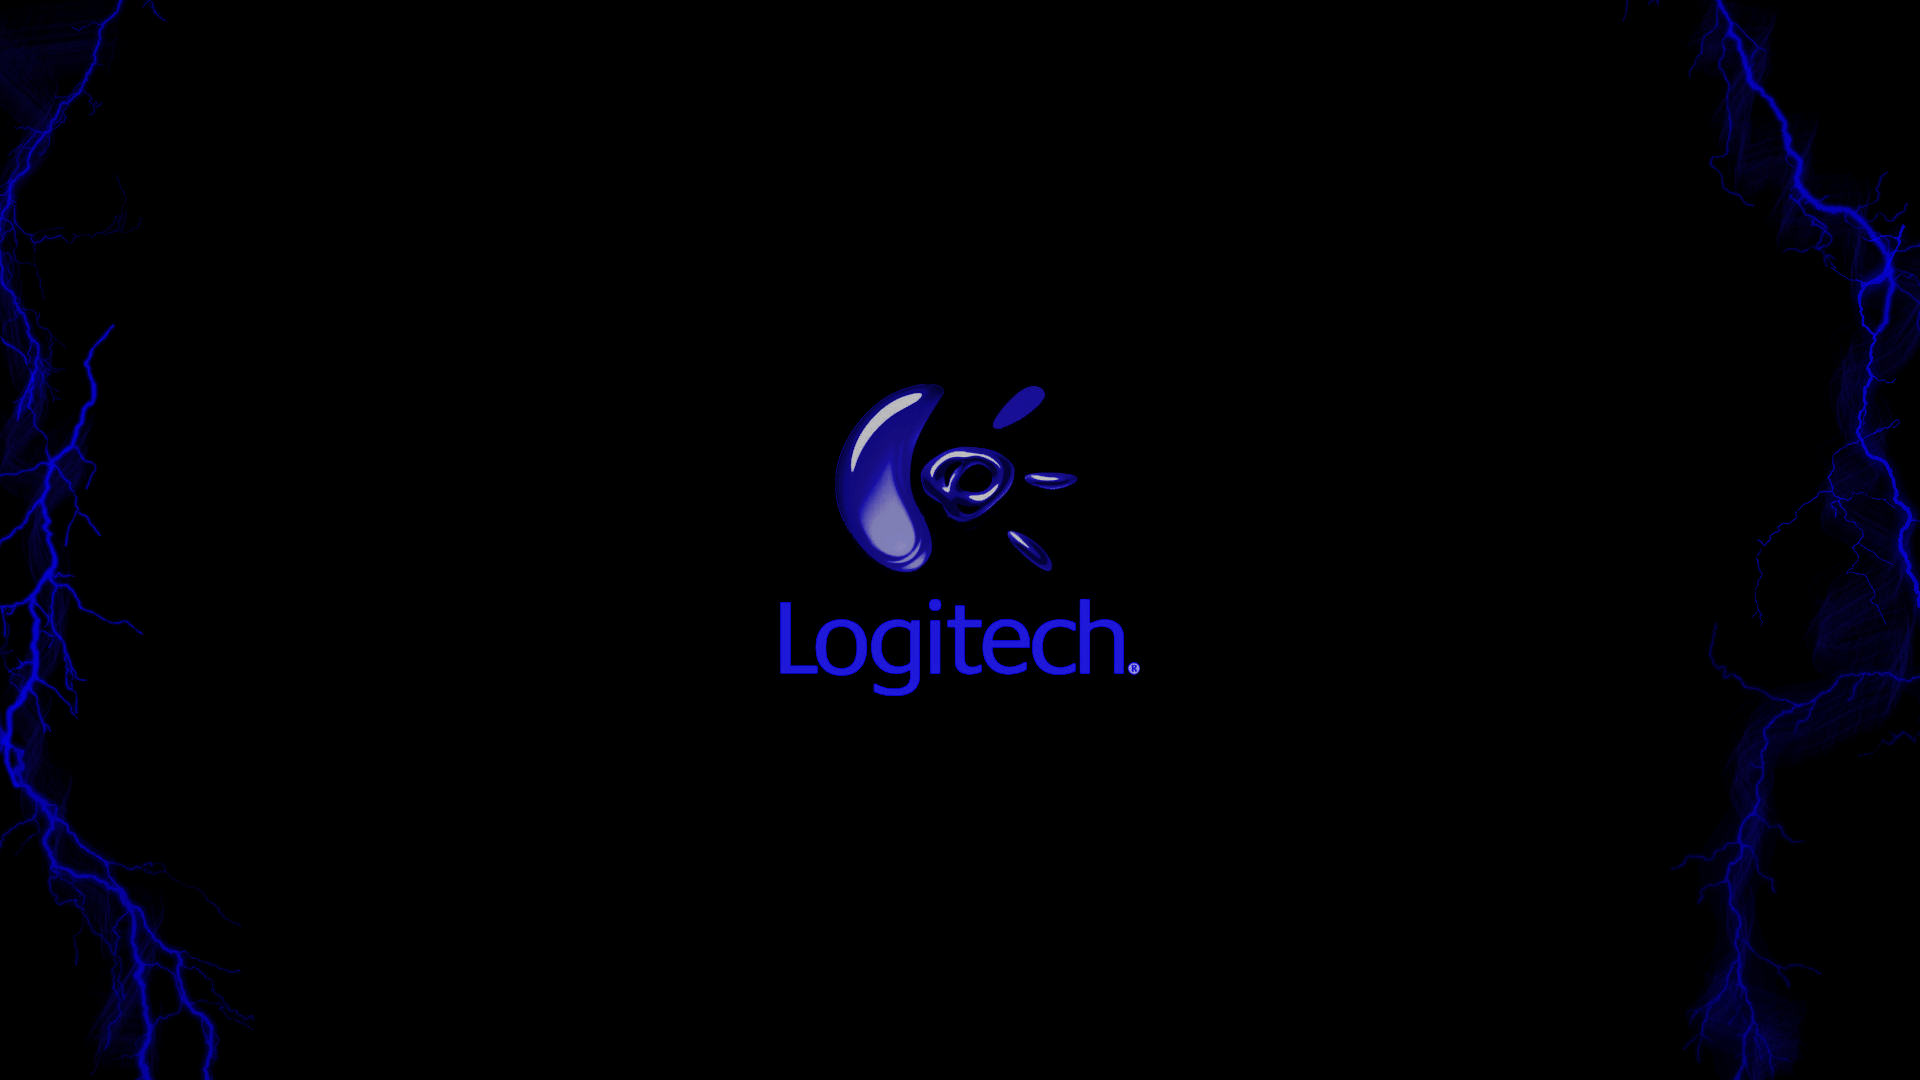 Logitech 4K Wallpapers